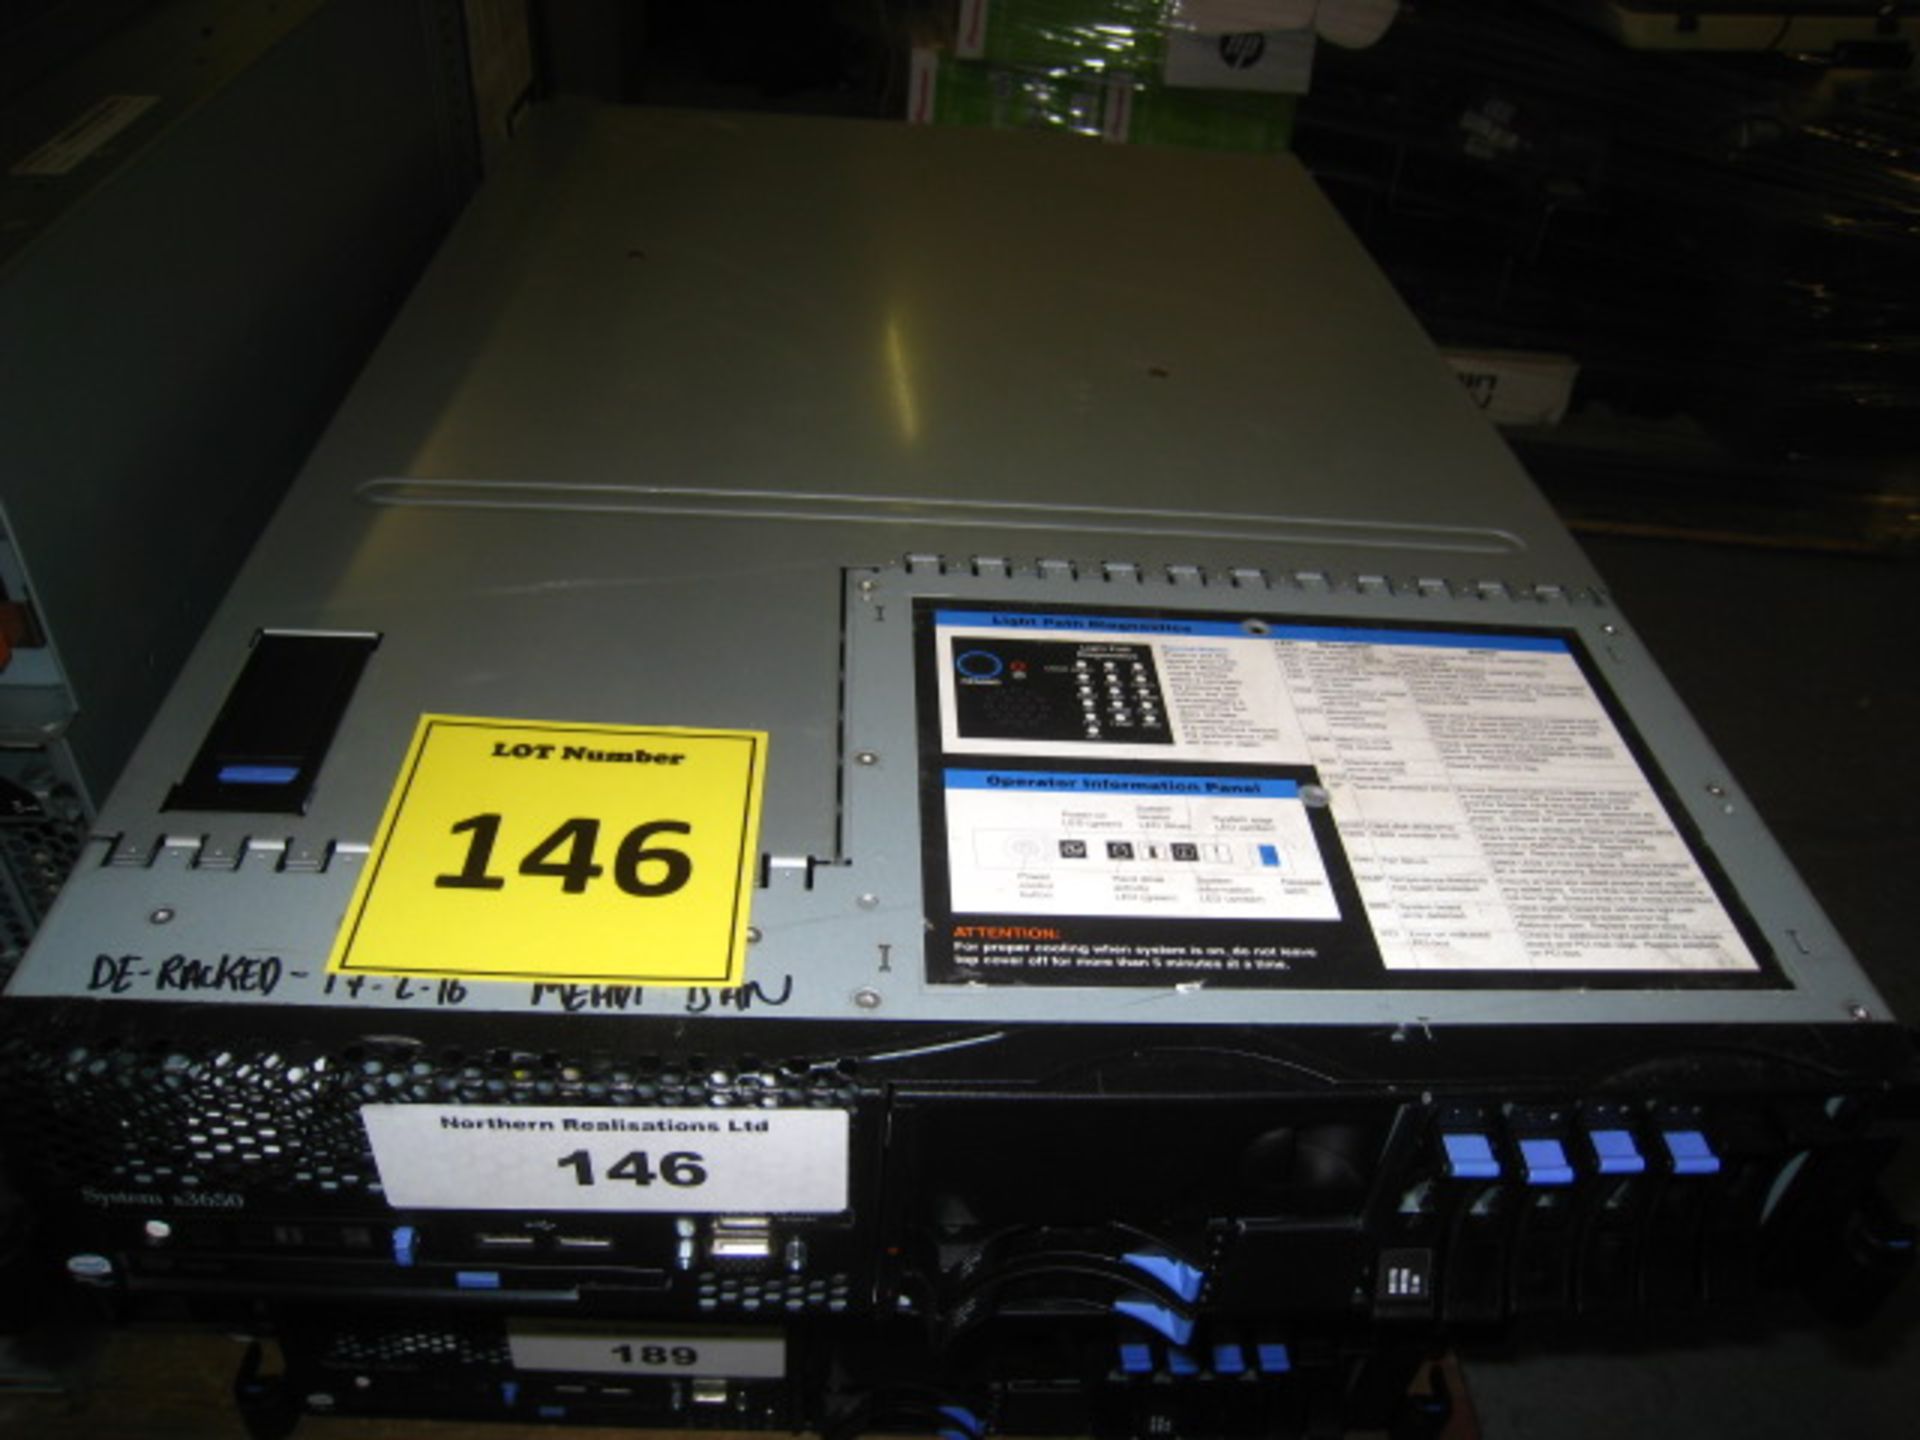 IBM X3650 2U RACKMOUNT FILESERVER . 2 X E5430 QUAD CORE 2.66GHZ PROCESSORS, 6GB RAM, 6 X 73GB SAS